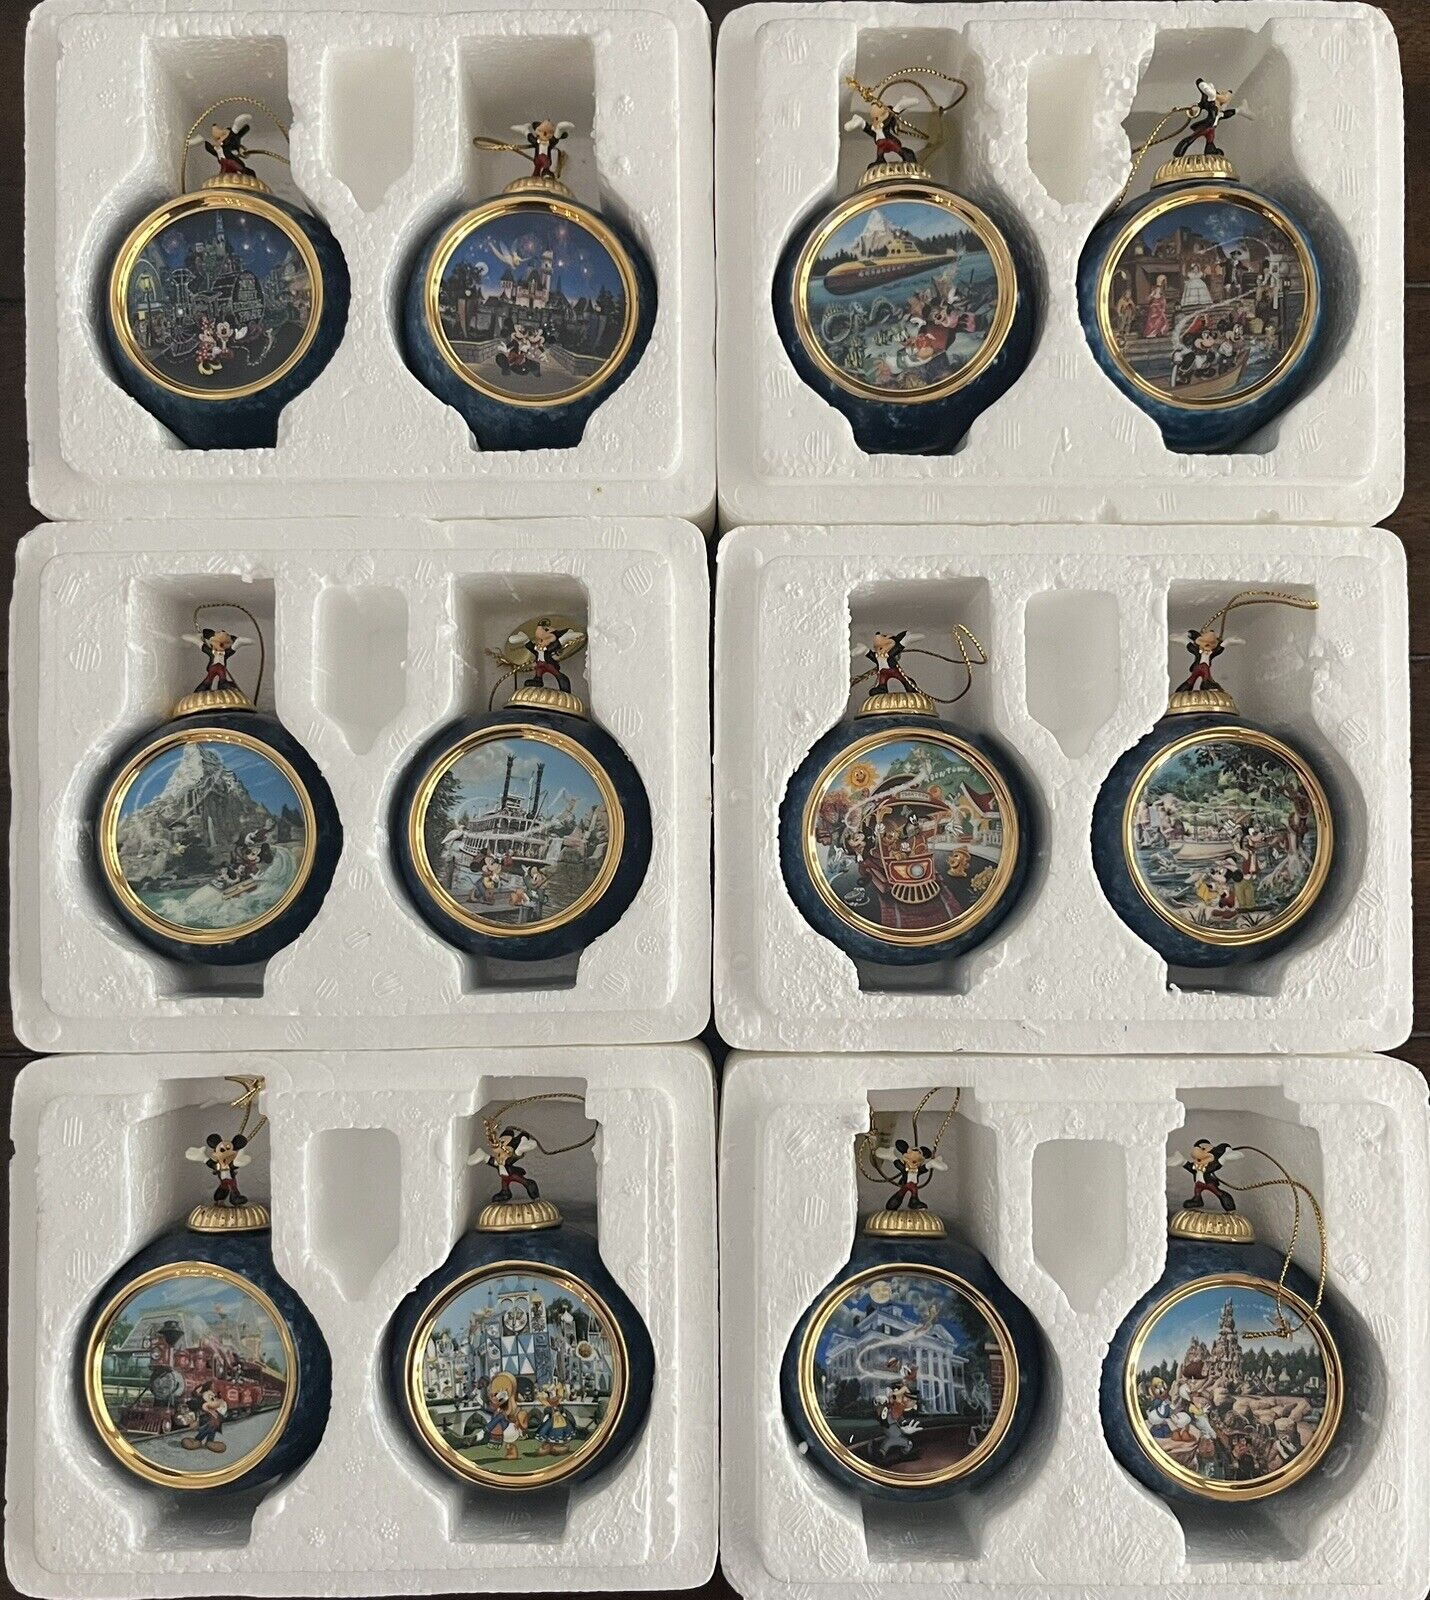 Bradford Exchange Ornaments Celebrating The Magic Of Disneyland Complete Set 12